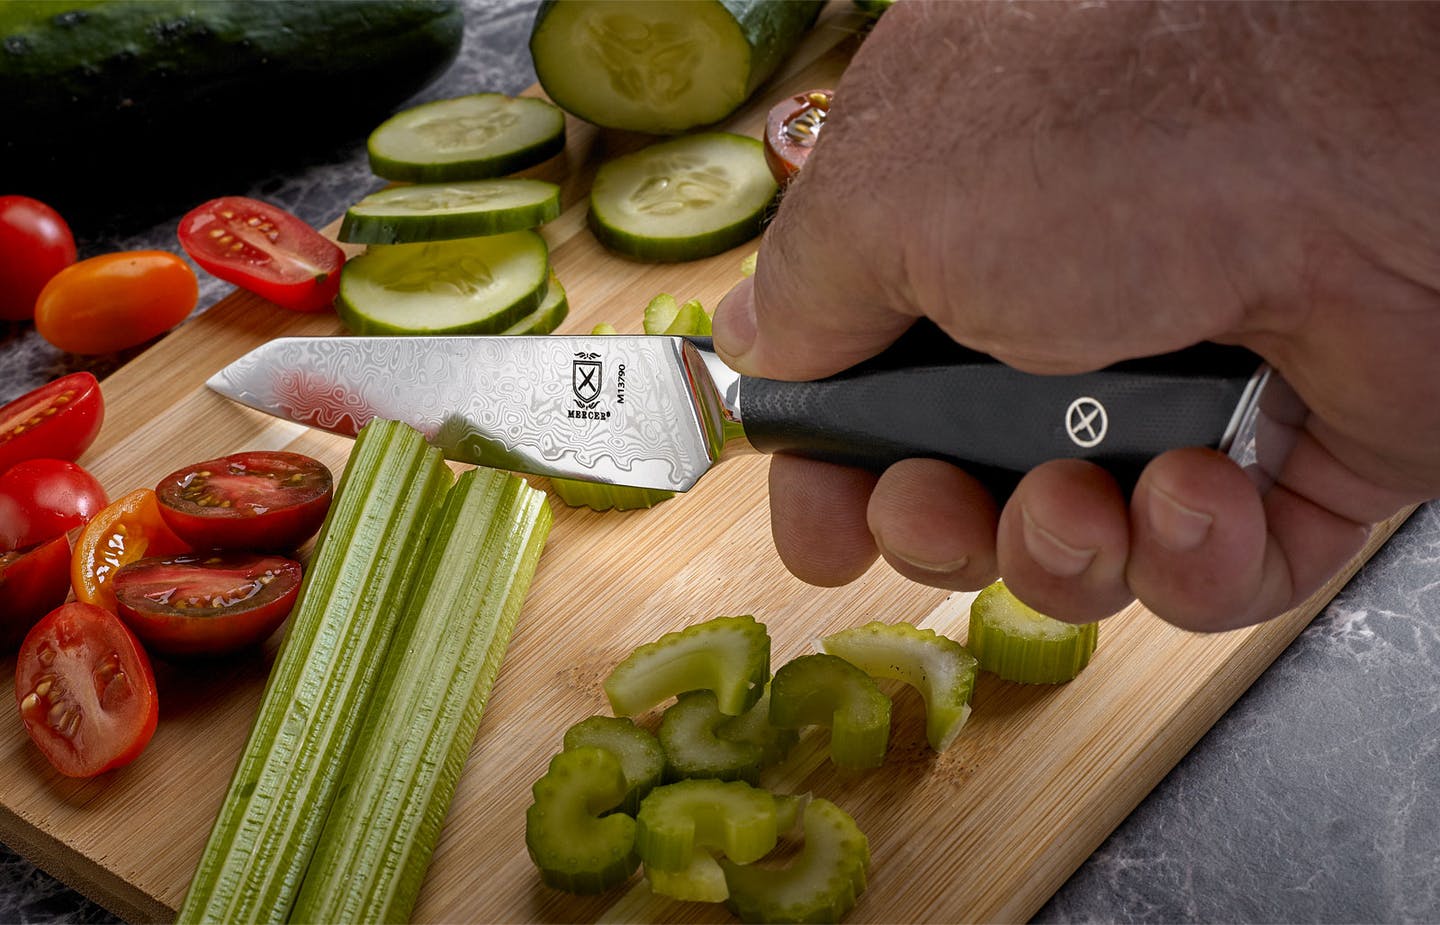 Mercer Culinary M13790 Damascus 5 Utility Knife, G10 Handle